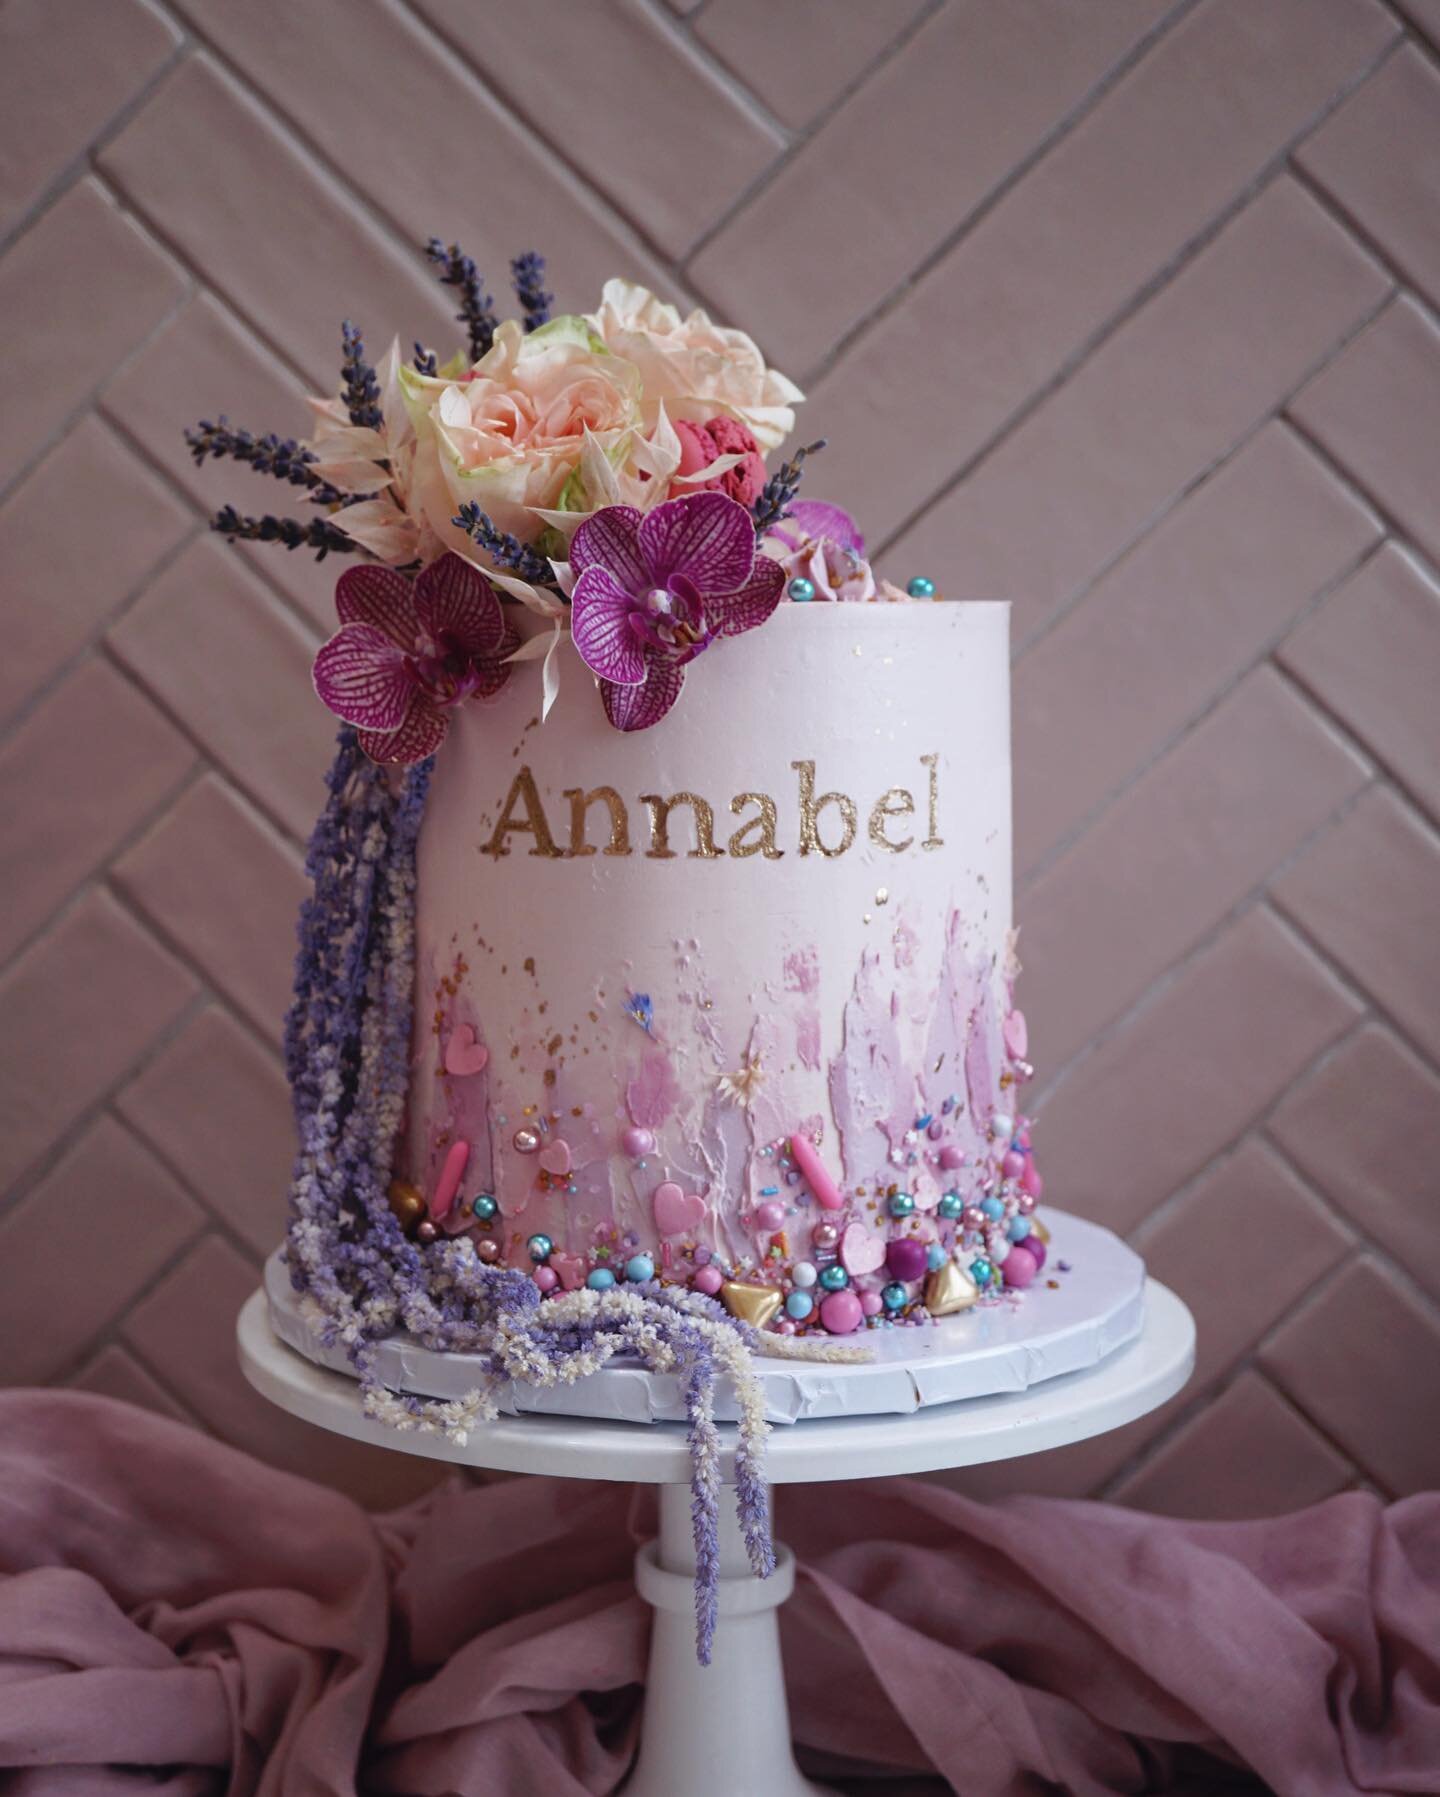 🌸💜 LAVENDER 💜🌸
⠀⠀⠀⠀⠀⠀⠀⠀⠀
Embossers - @sweet.stamp 
Sprinkles - @super_streusel 
Colour - @colour.mill 
⠀⠀⠀⠀⠀⠀⠀⠀⠀
⠀⠀⠀⠀⠀⠀⠀⠀⠀
birthdaycake #pastelcake #pinkcake #buttercream #dripcake #cake #cakemaker #cakedecorating #instacake #instacakes #baker #b